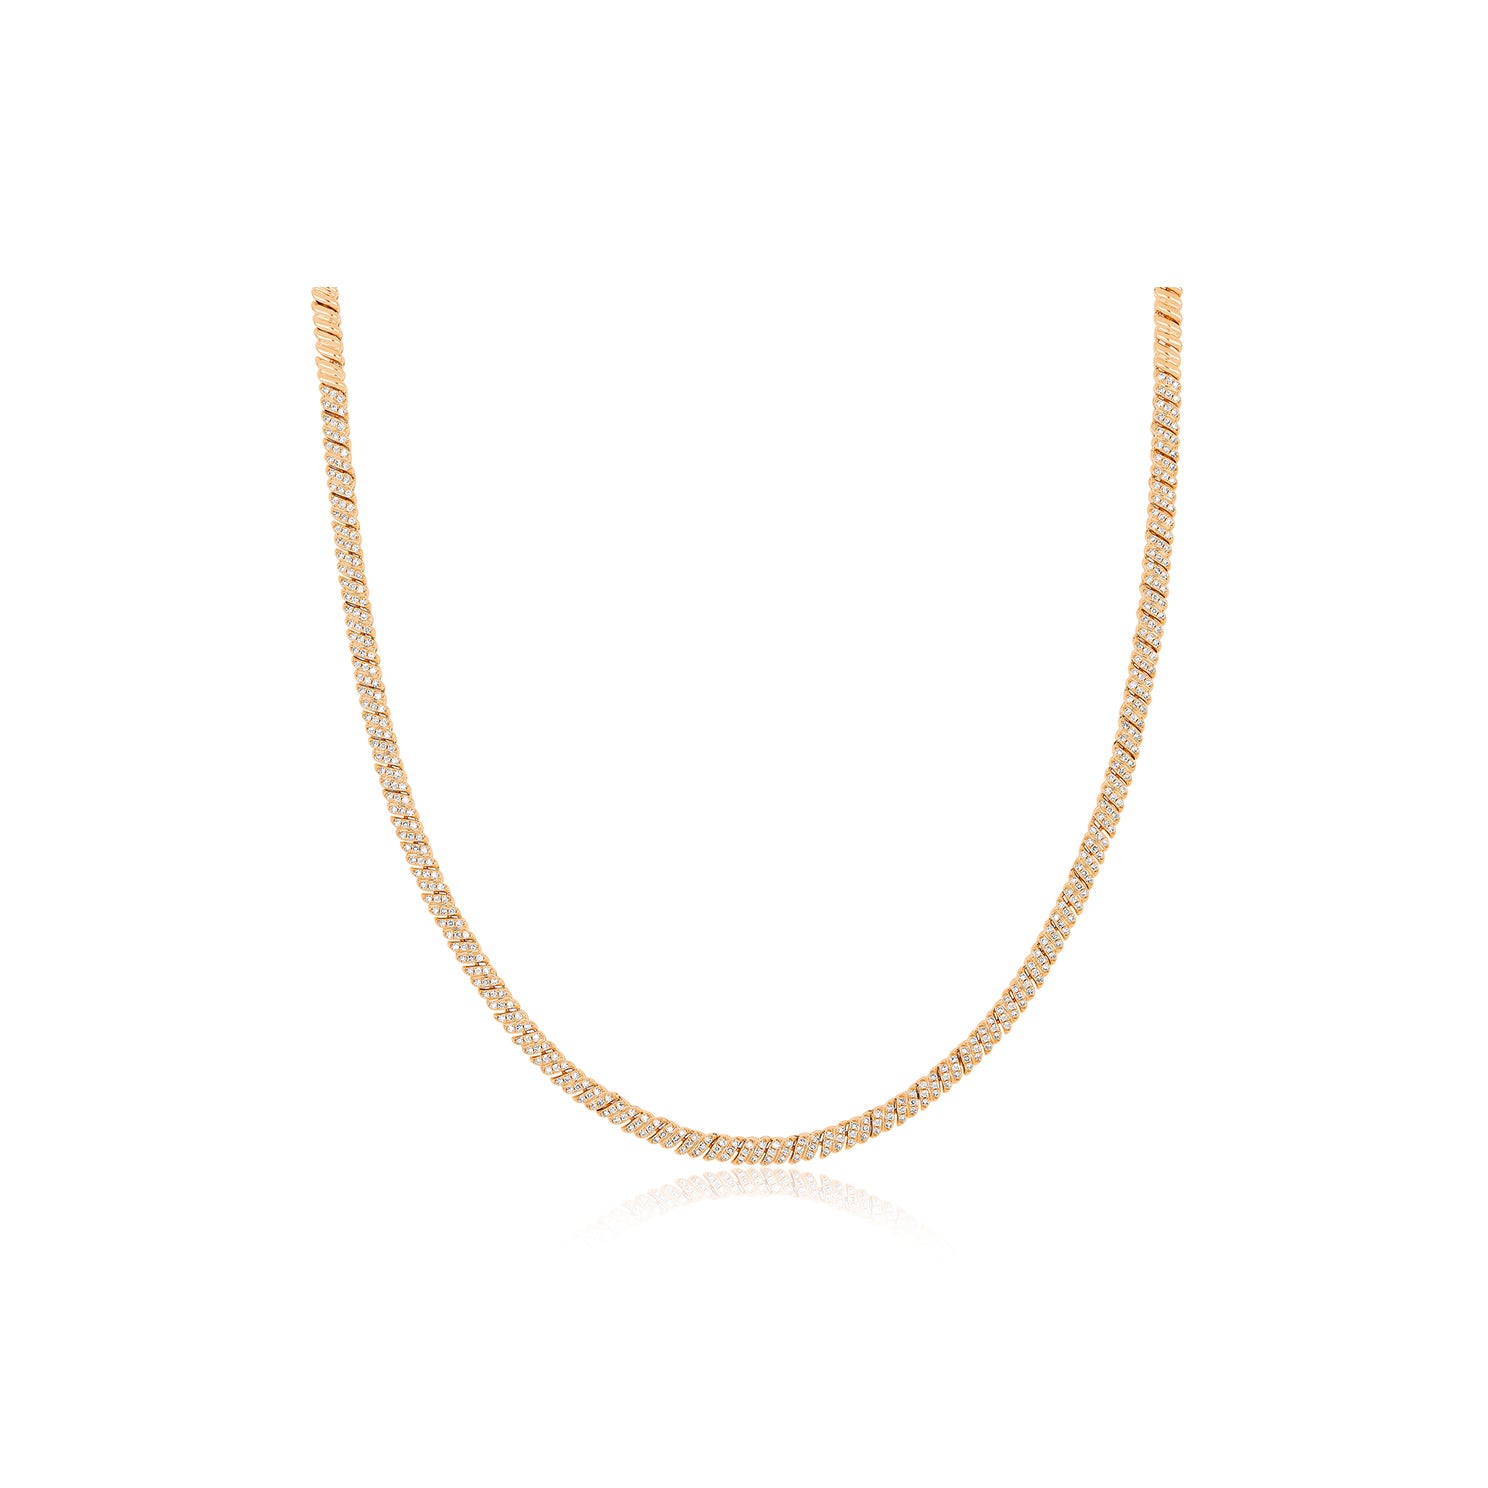 Diamond Twist Eternity Necklace in 14k rose gold